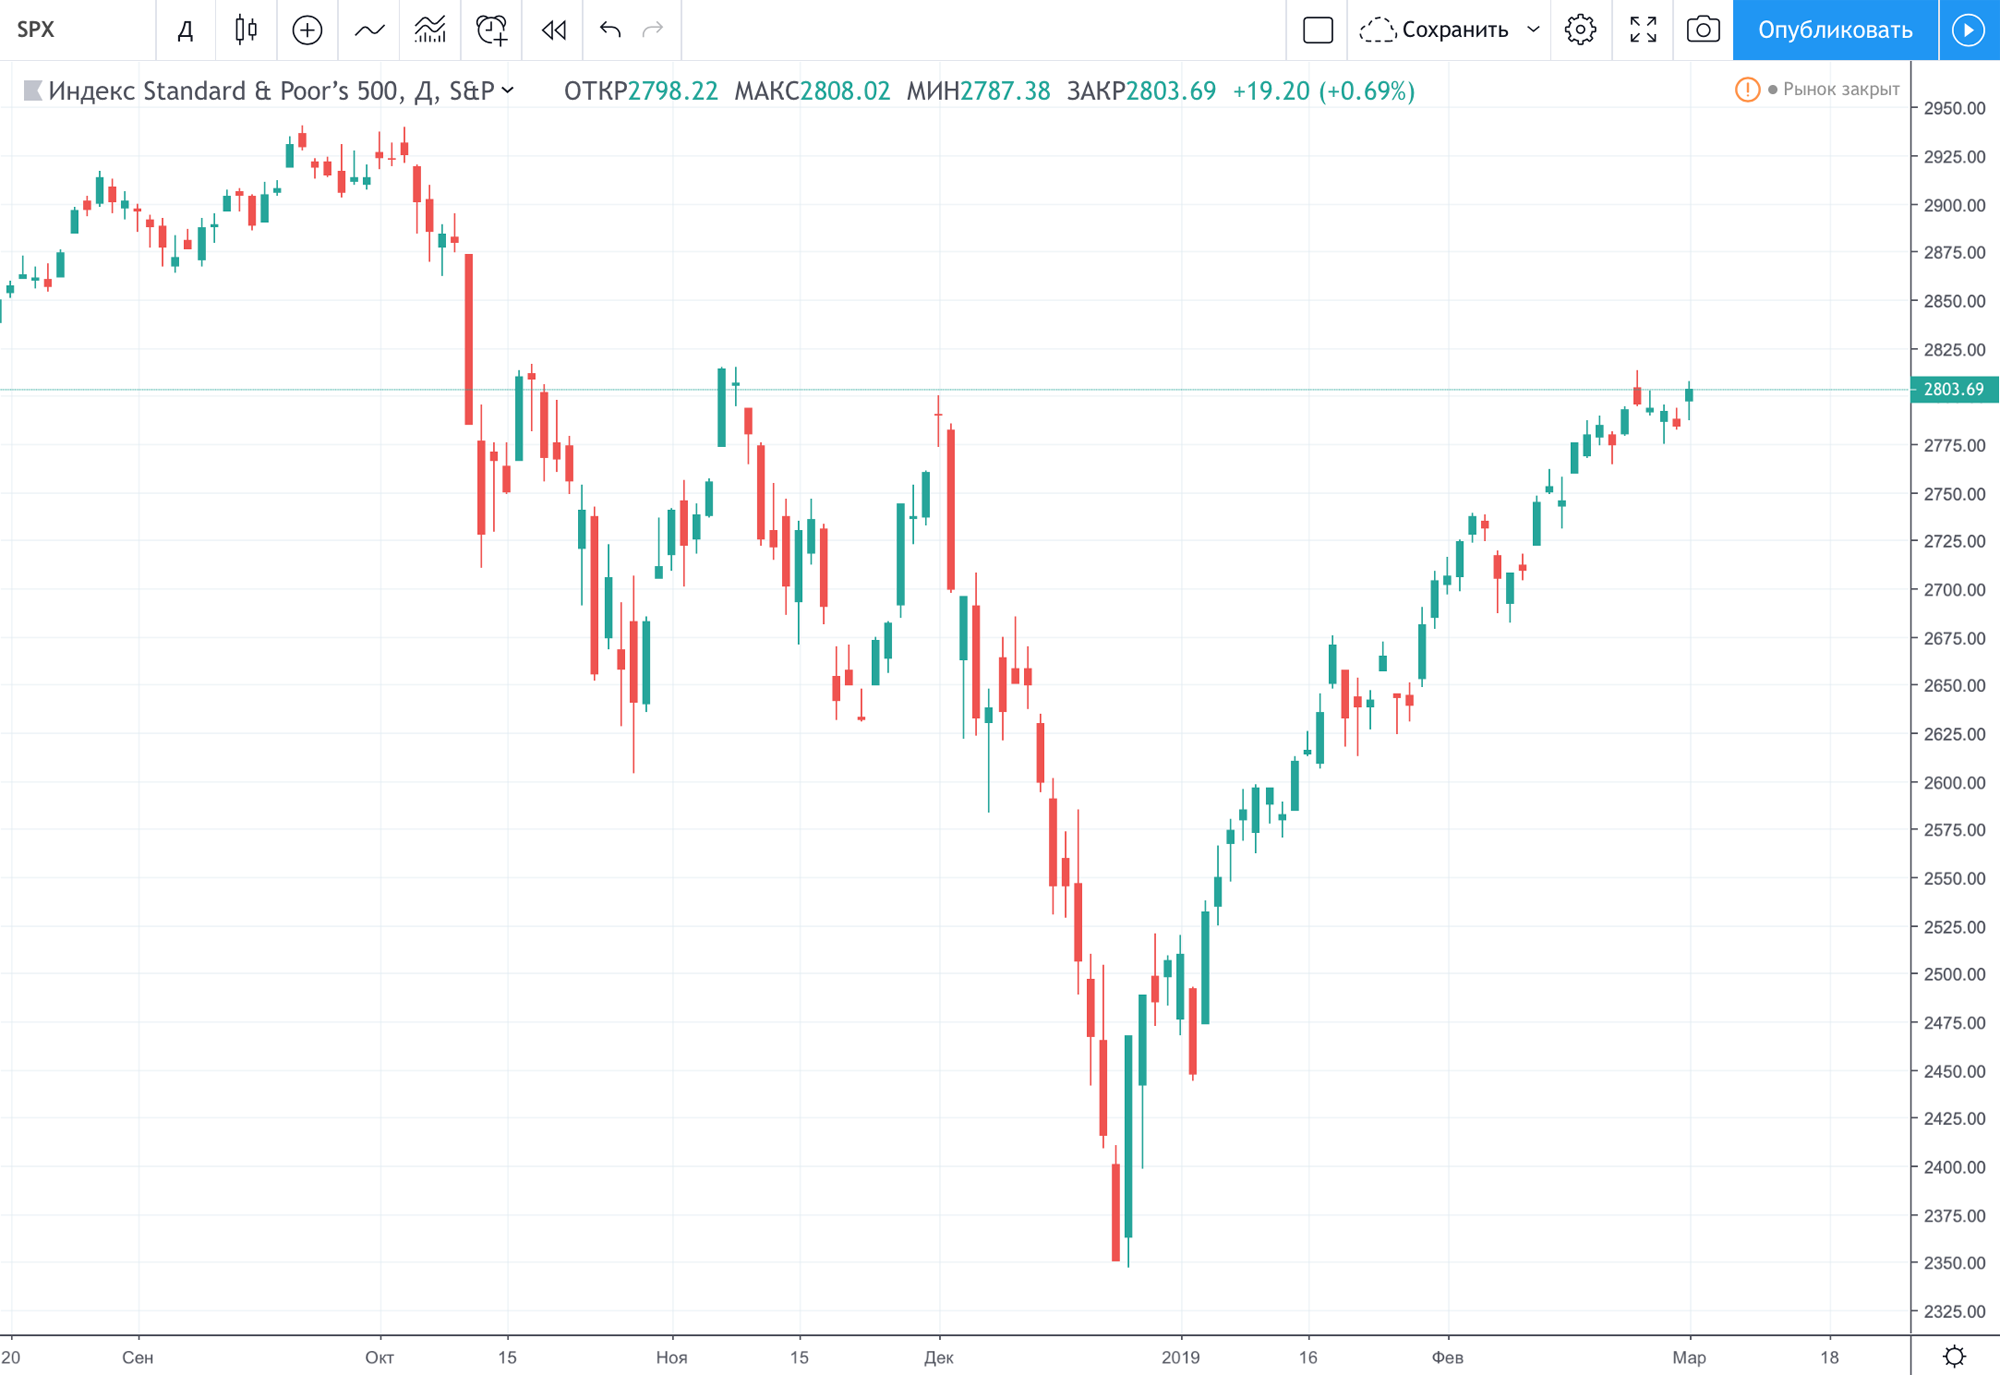 Поведение индекса S&P 500 во второй половине 2018 и начале 2019 года. Хорошо видно ралли с конца декабря. График: Tradingview